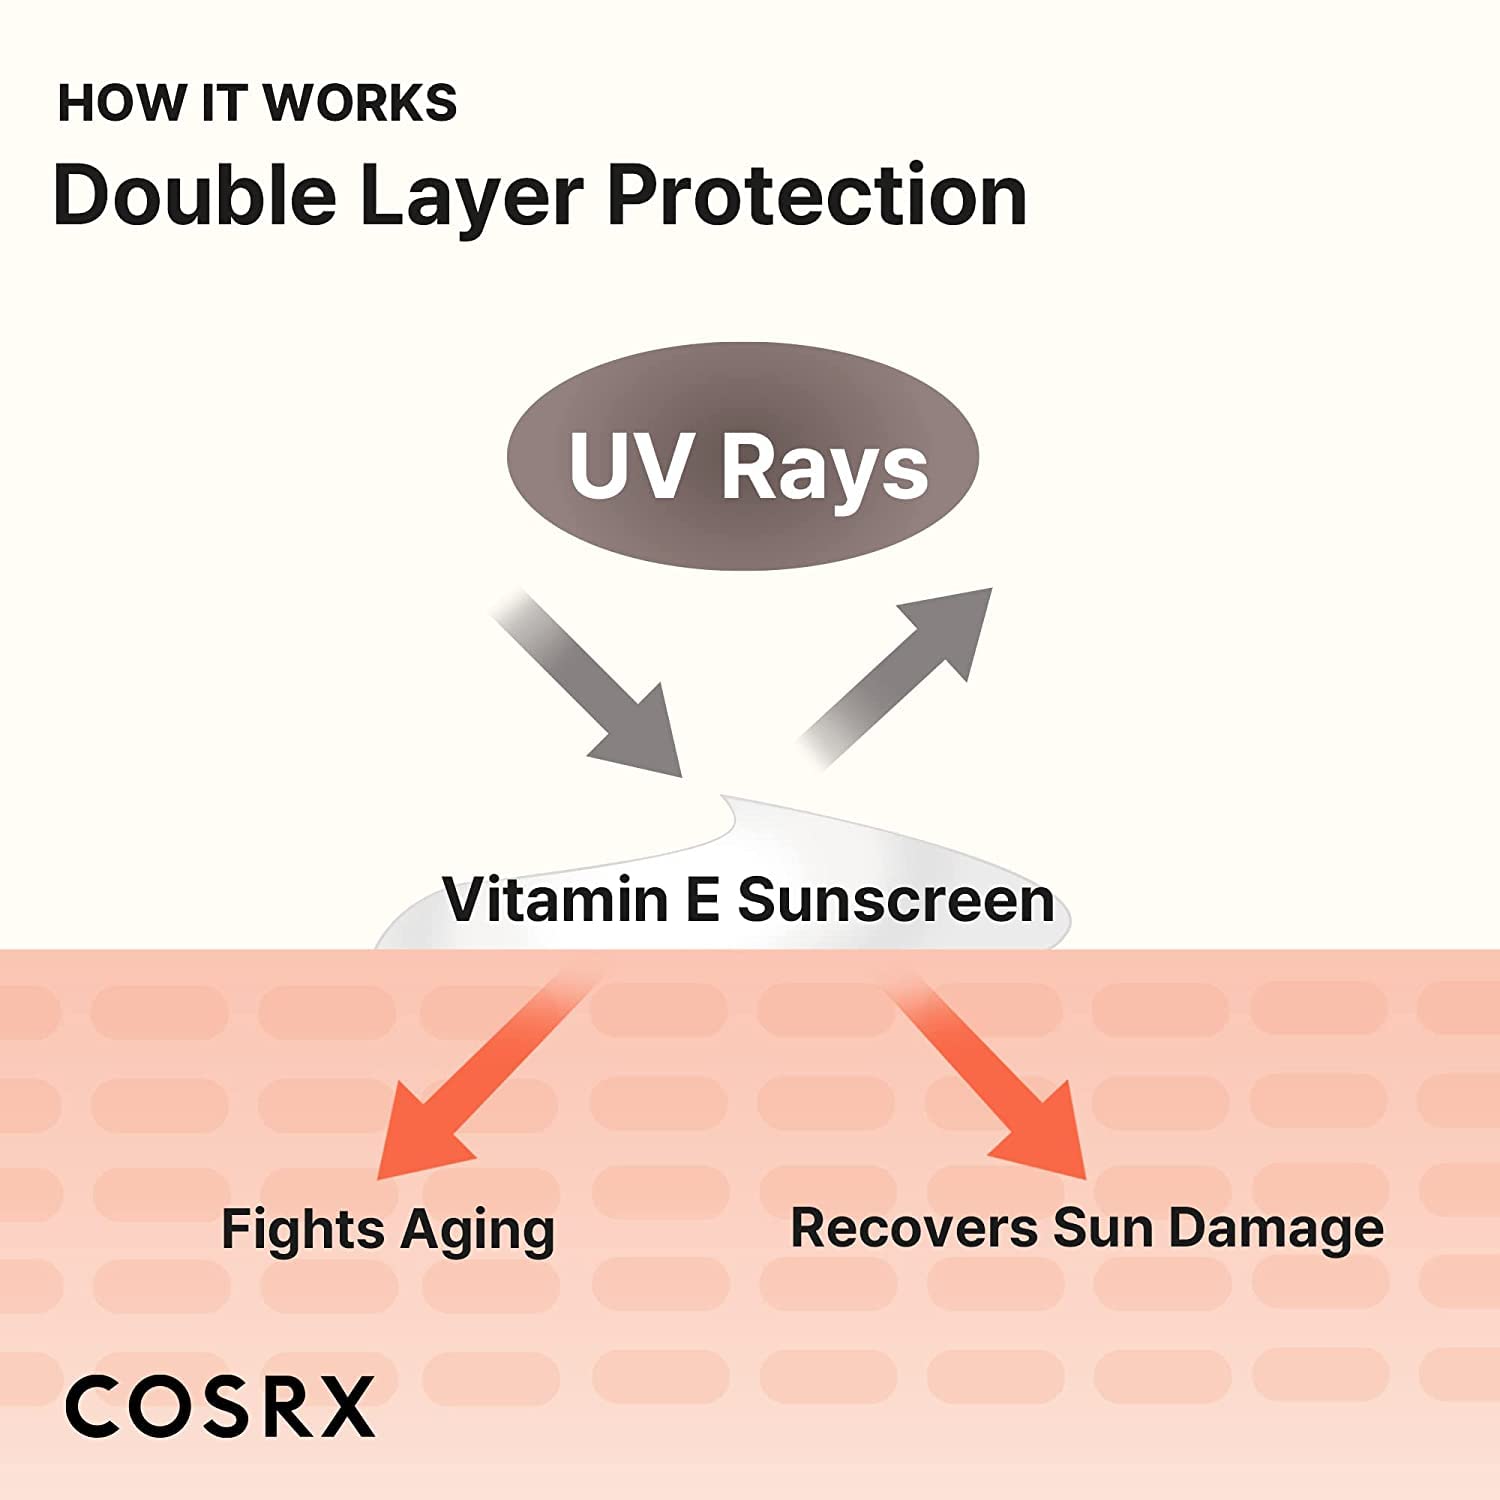 COSRX Vitamin Duo - Vitamin C 23% Serum + VItamin E SPF 50+ Daily Sunscreen, Brighten, Hydarate, and Protect Skin from UVA and UVB Rays, No Whitecast, Korean SKincare